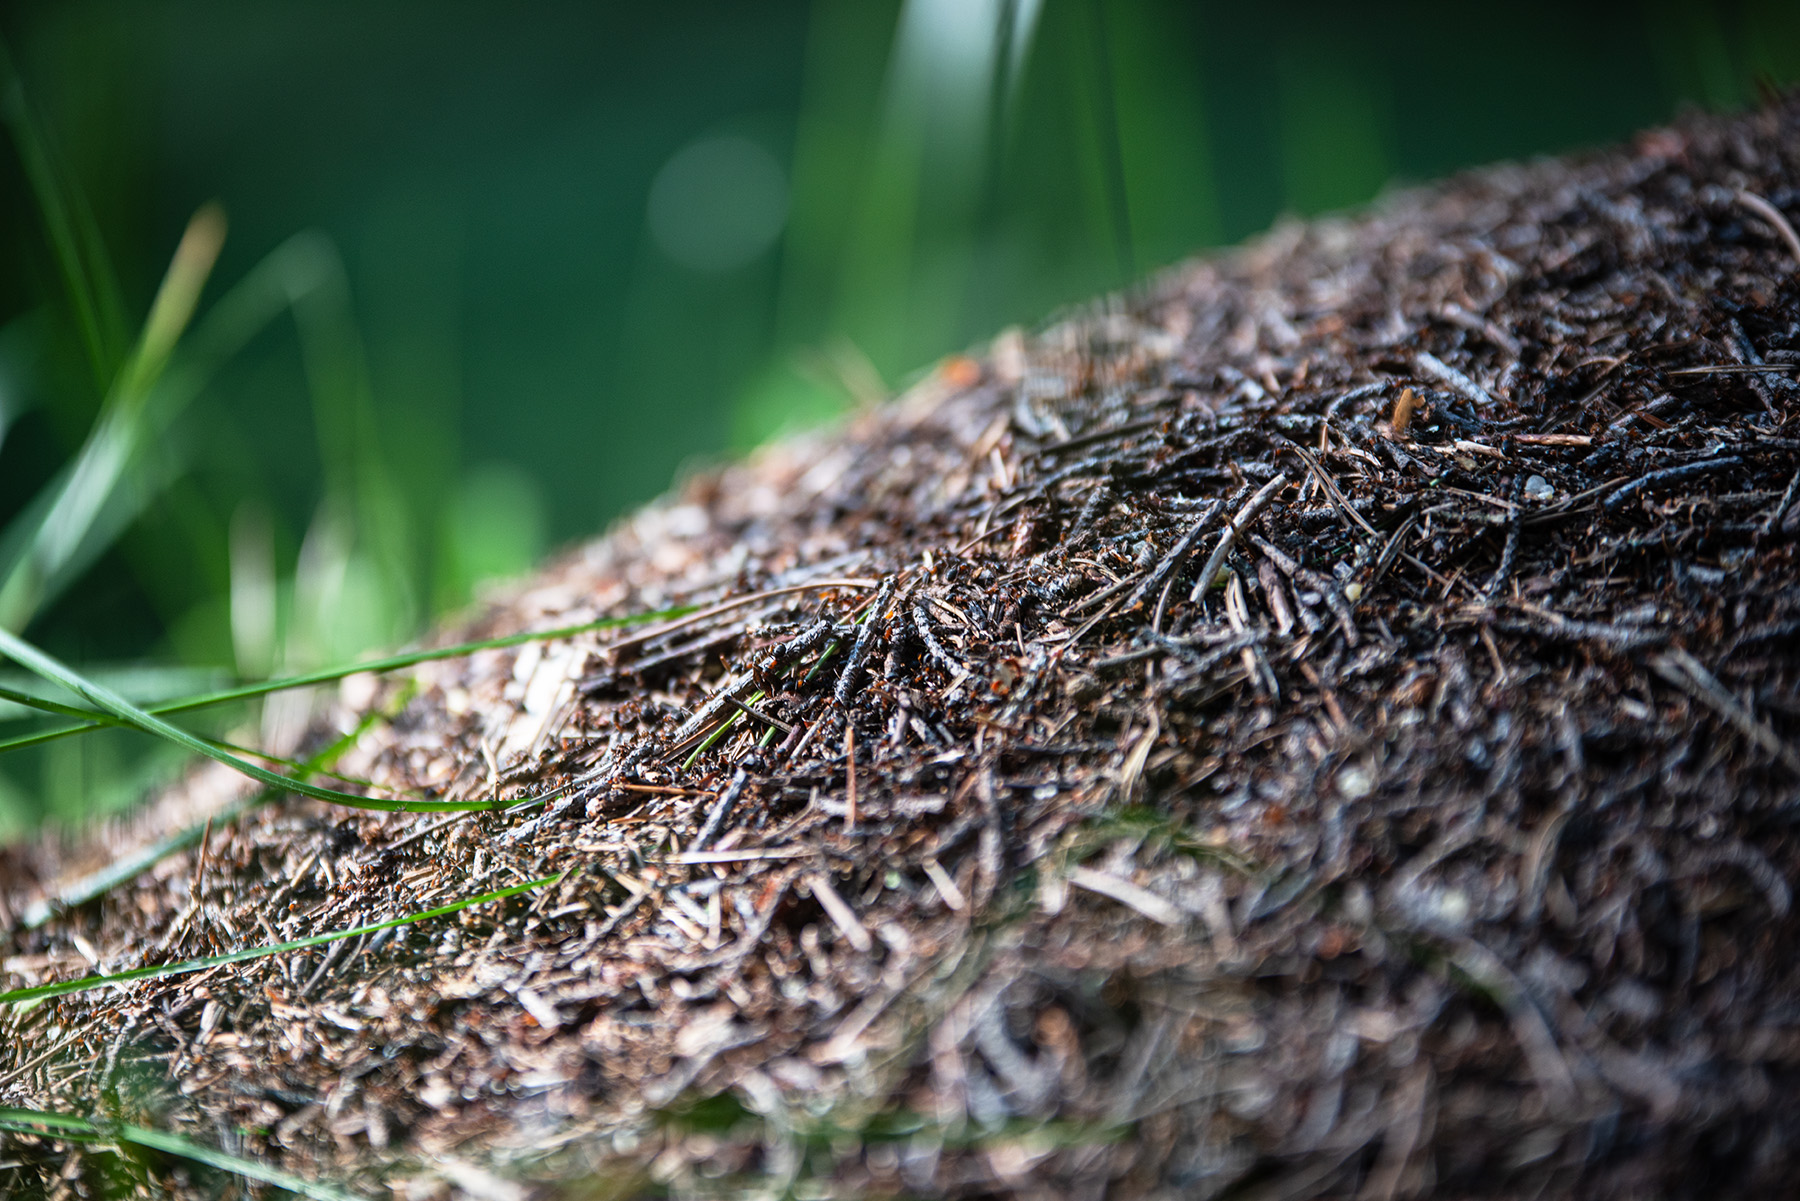 Mound ants nest